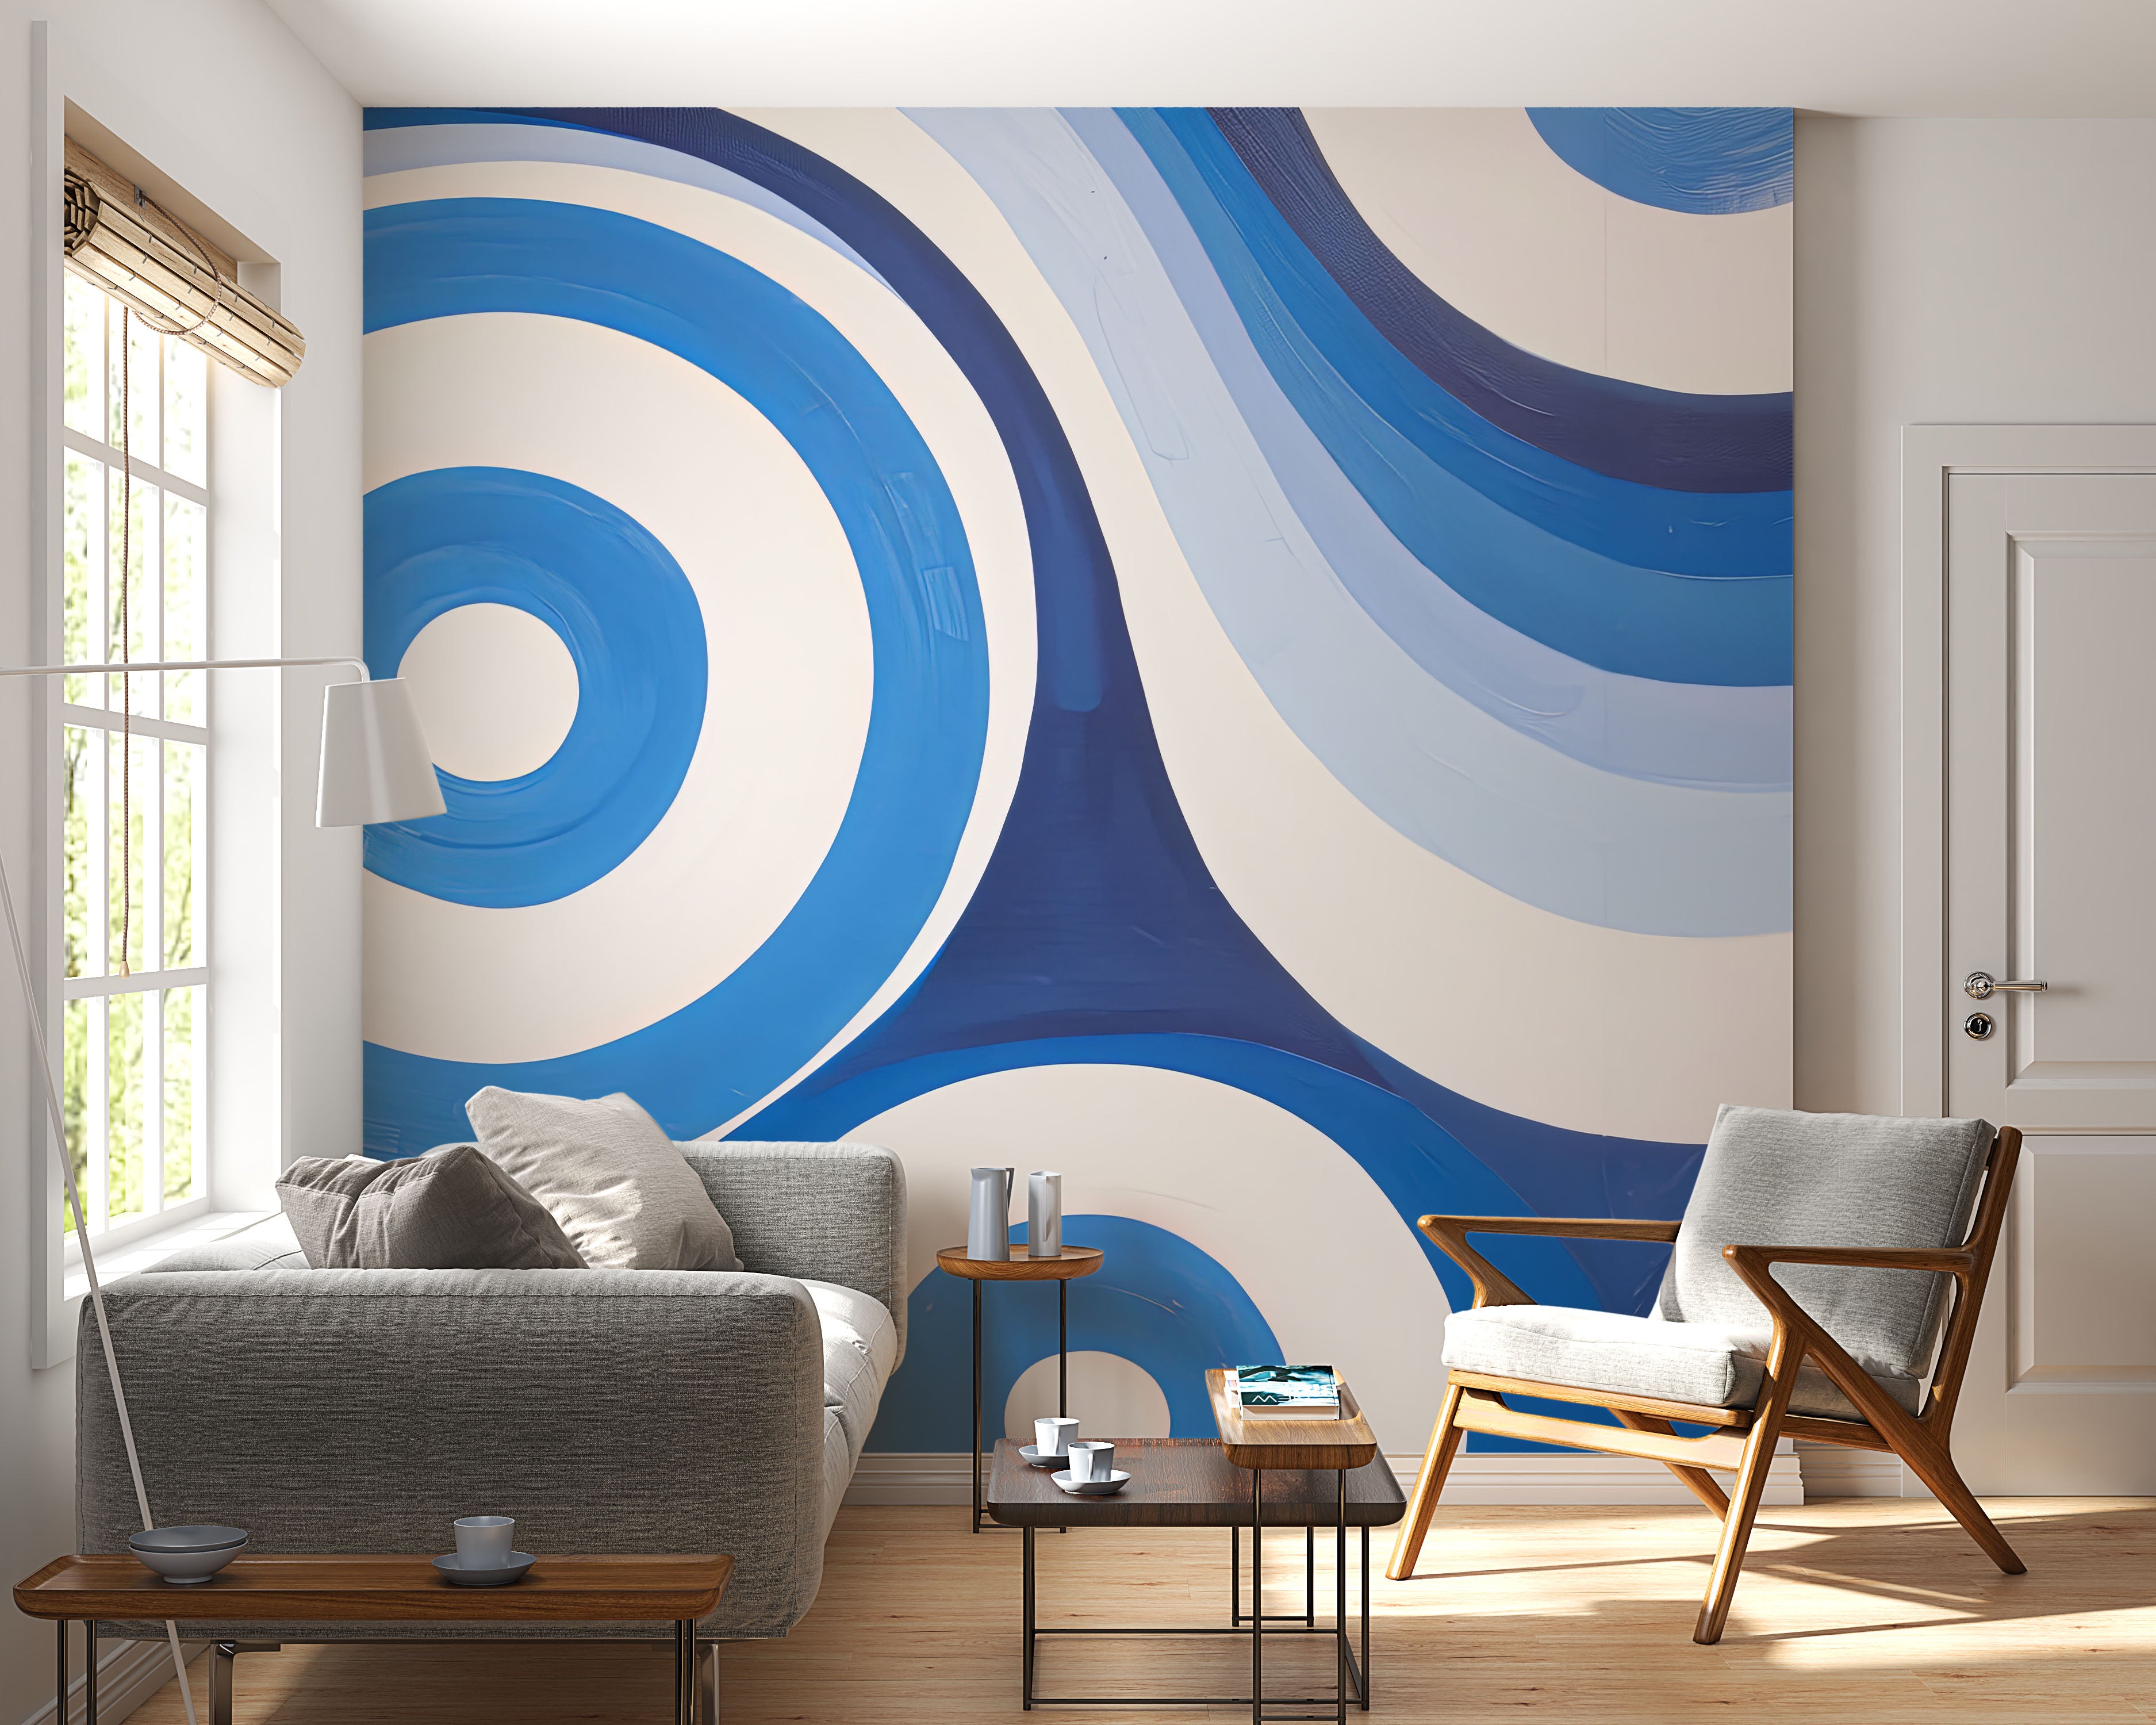 Azure Swirls: Harmony in Blue and White